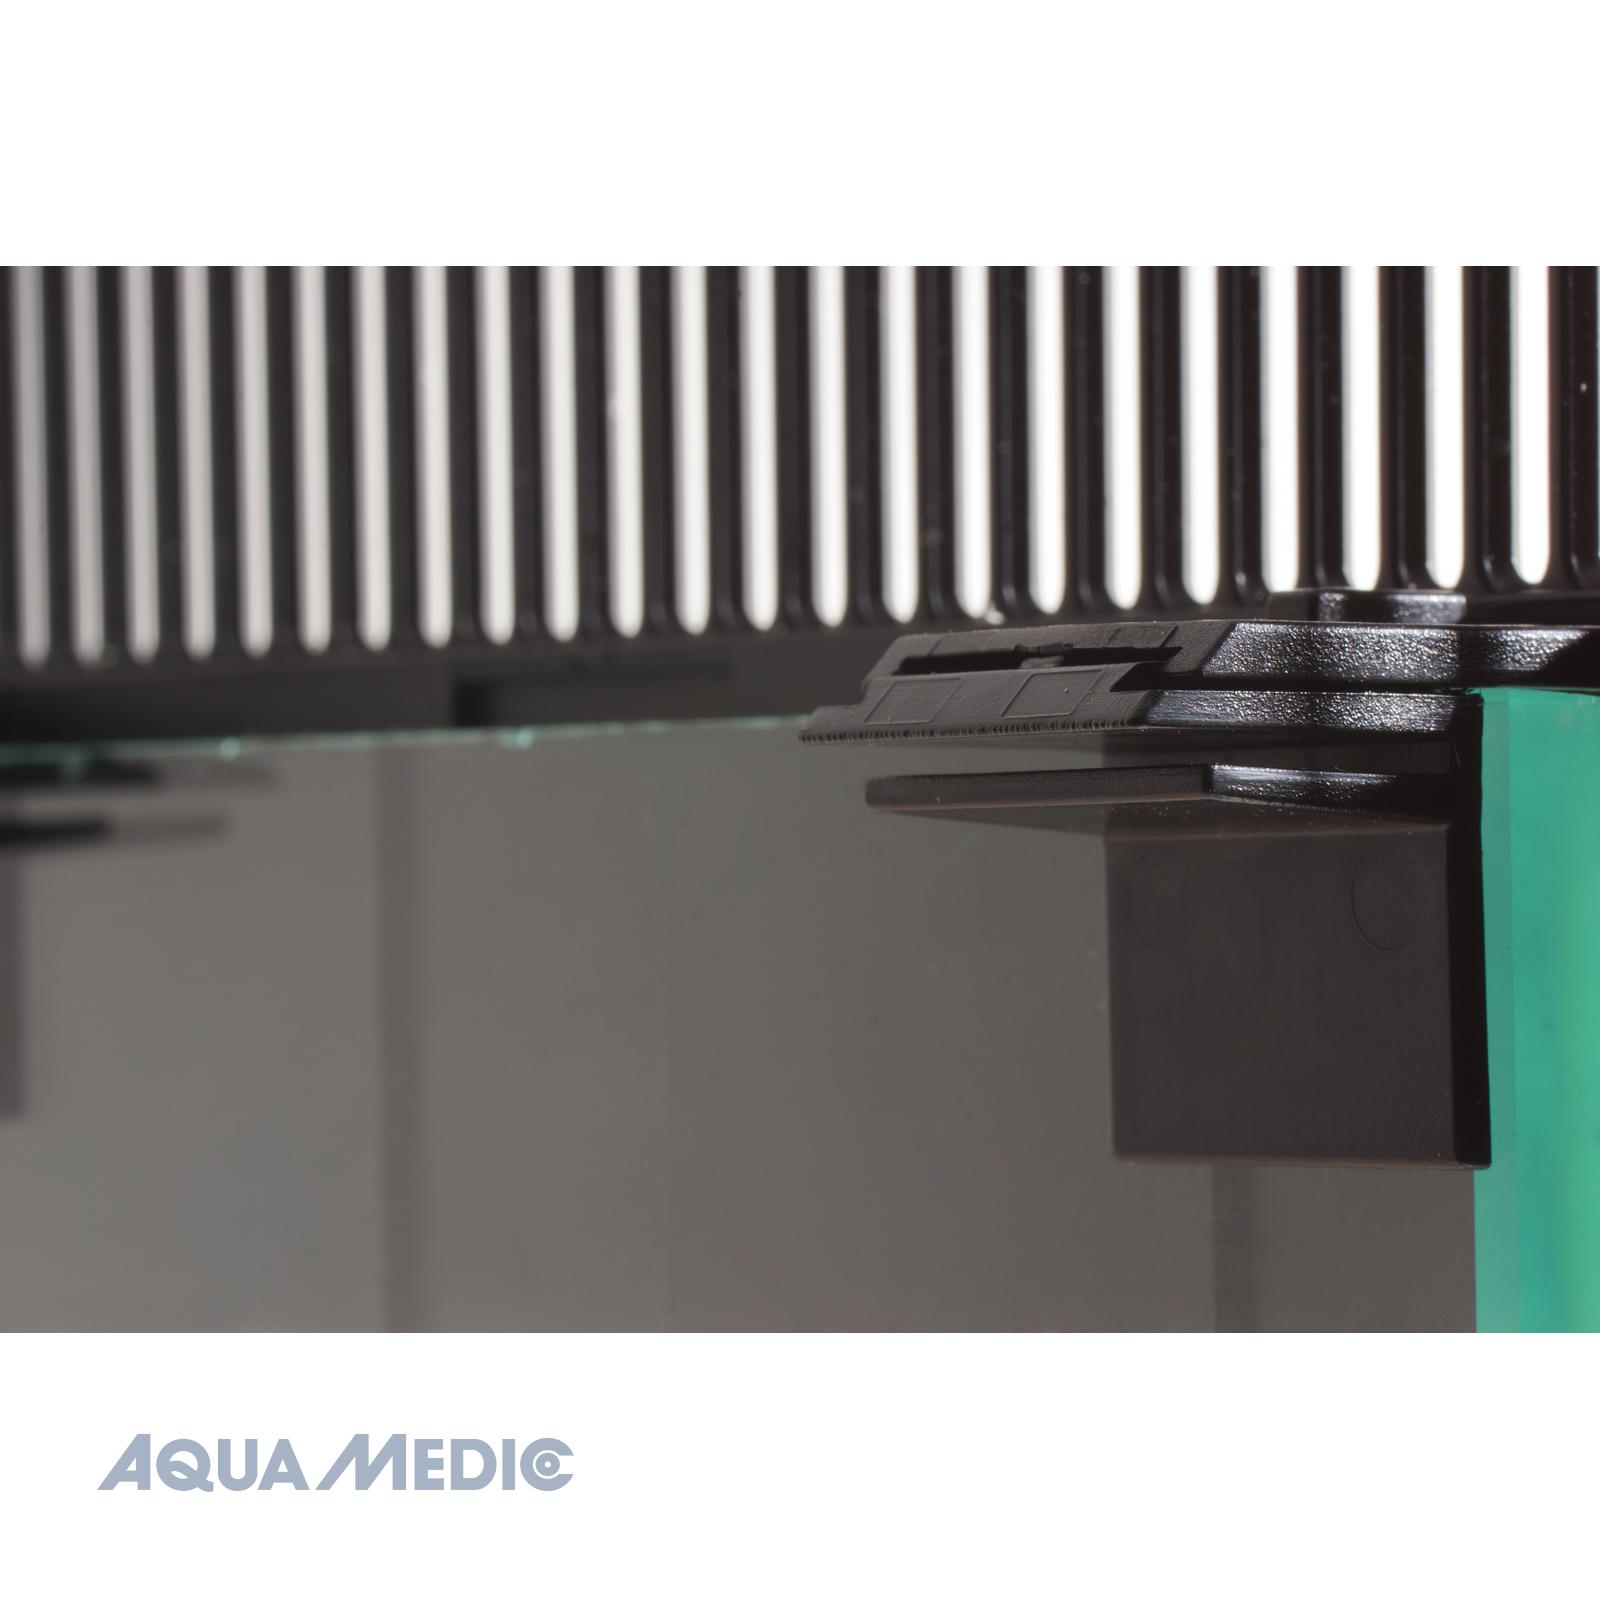 Aqua Medic overflow comb with holder 50 cm